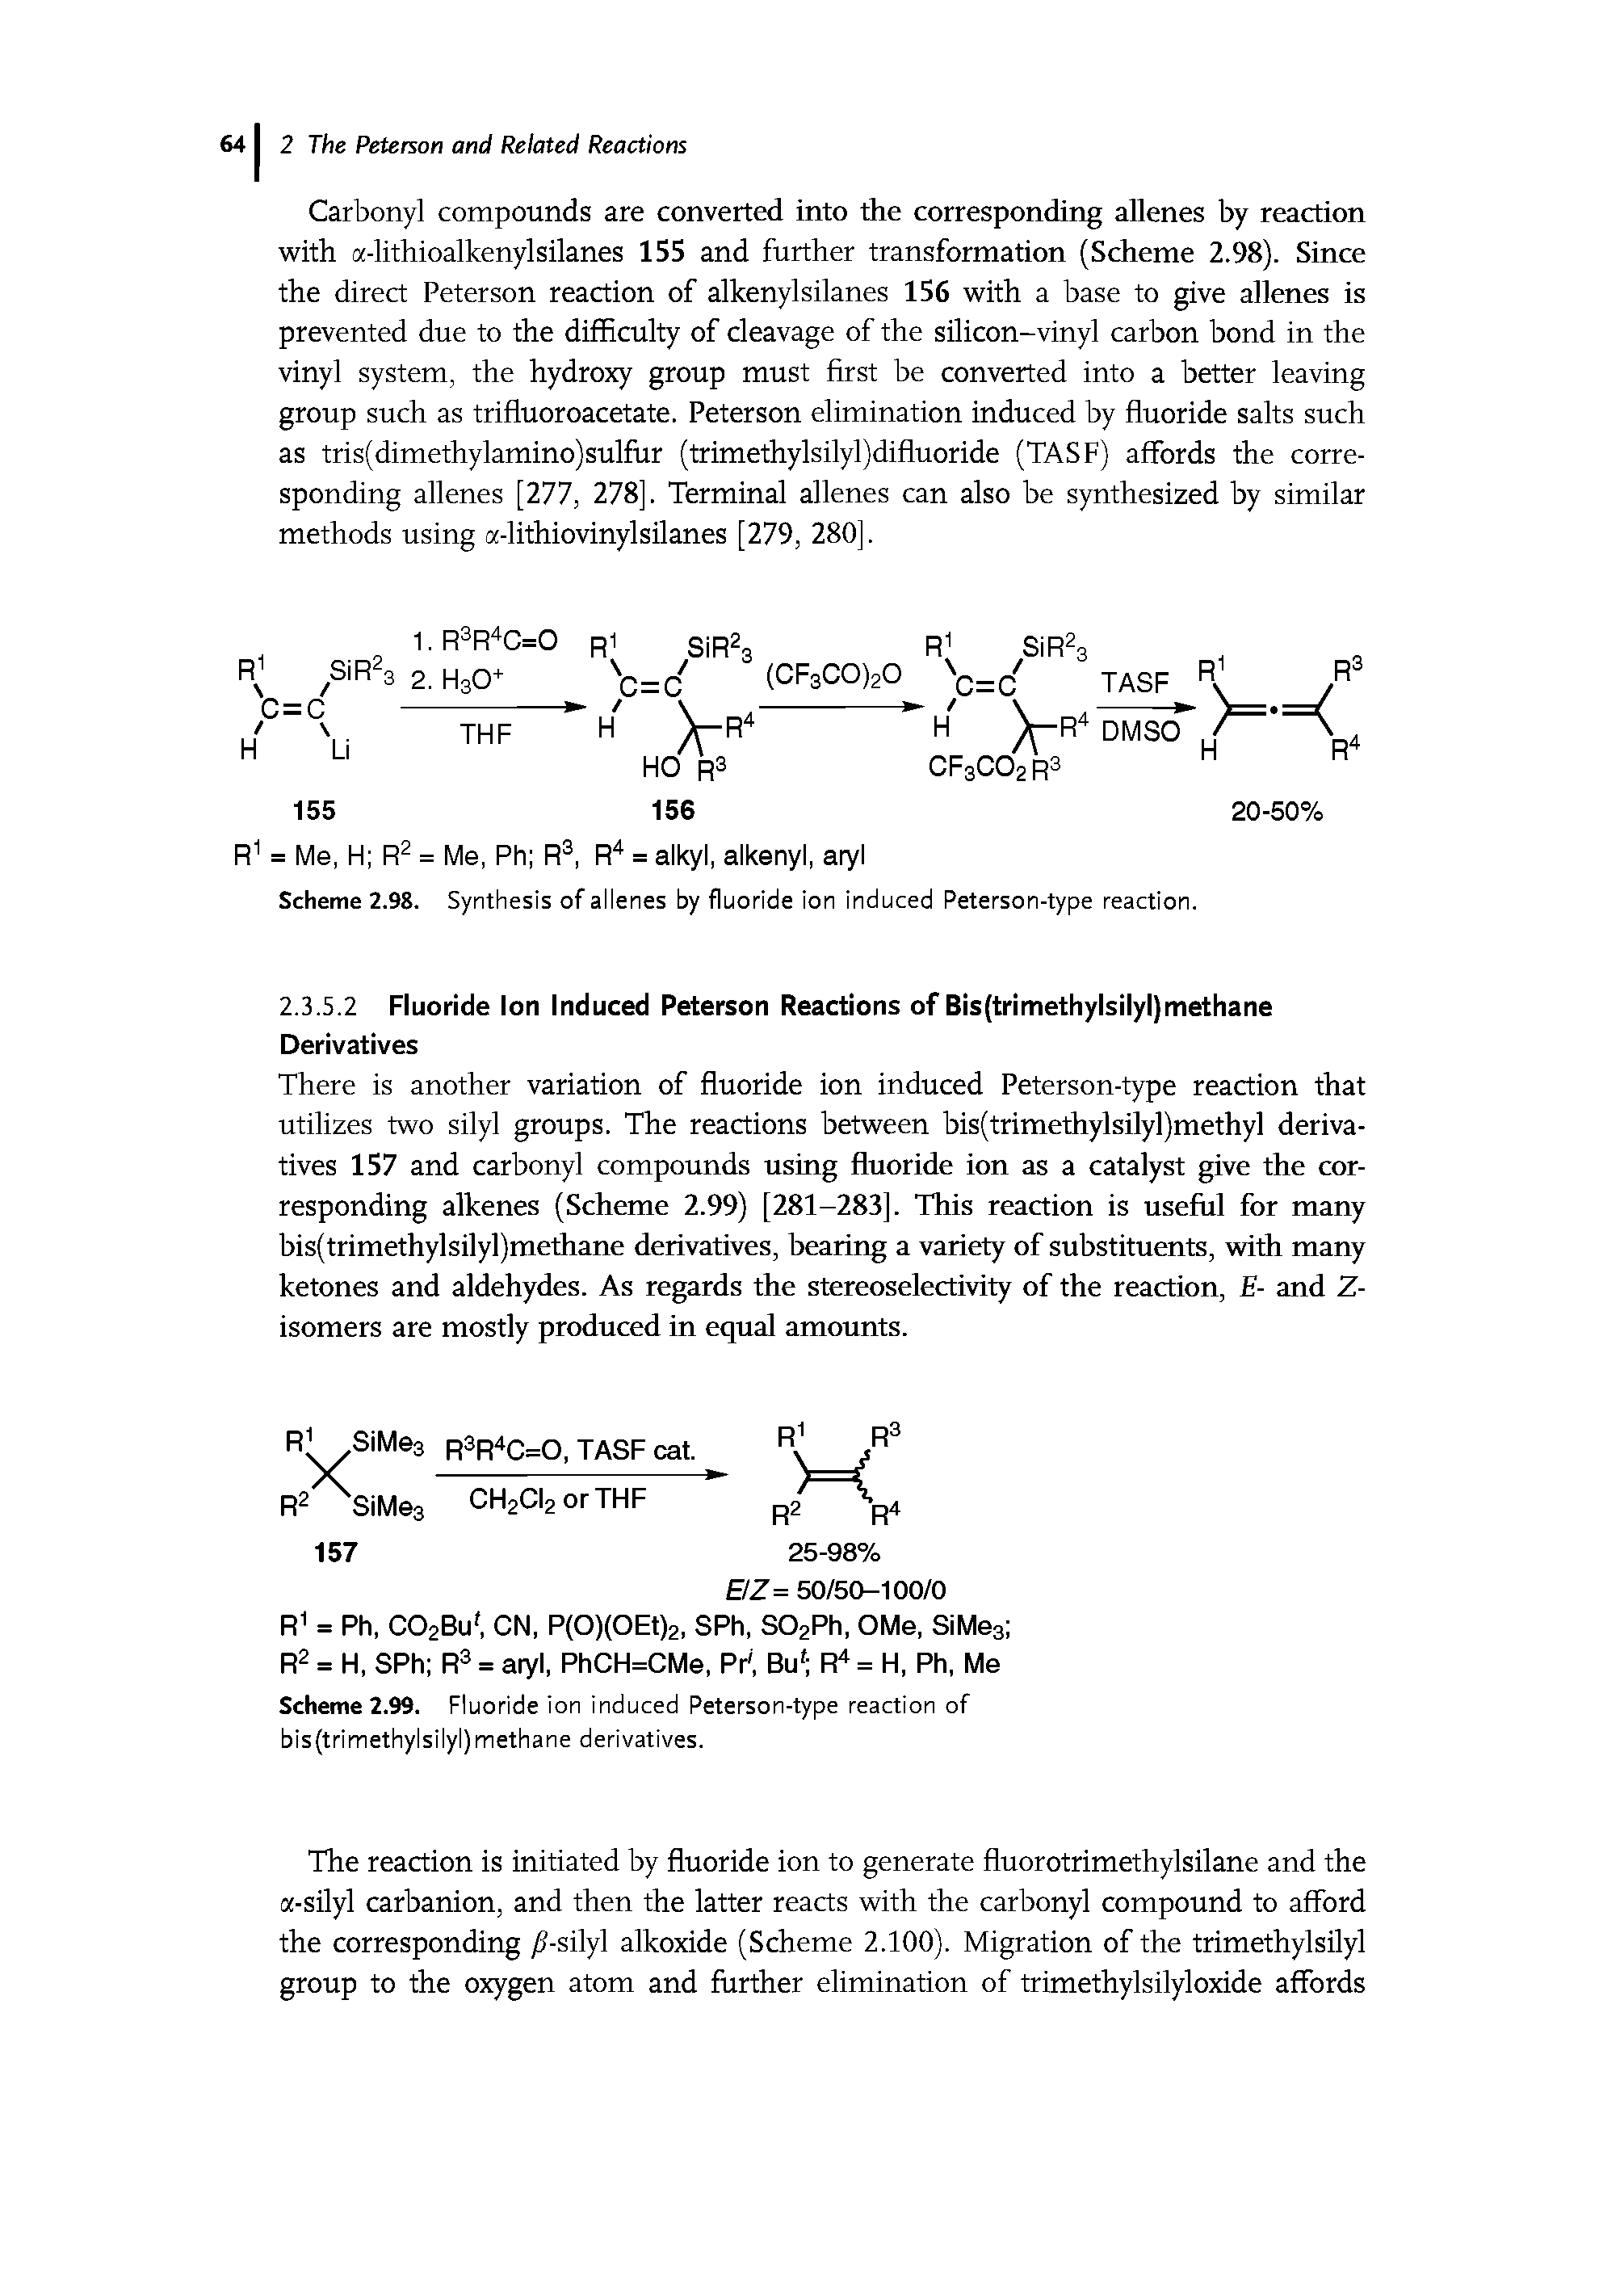 Scheme 2.99. Fluoride ion induced Peterson-type reaction of bis(trimethylsilyl) methane derivatives.